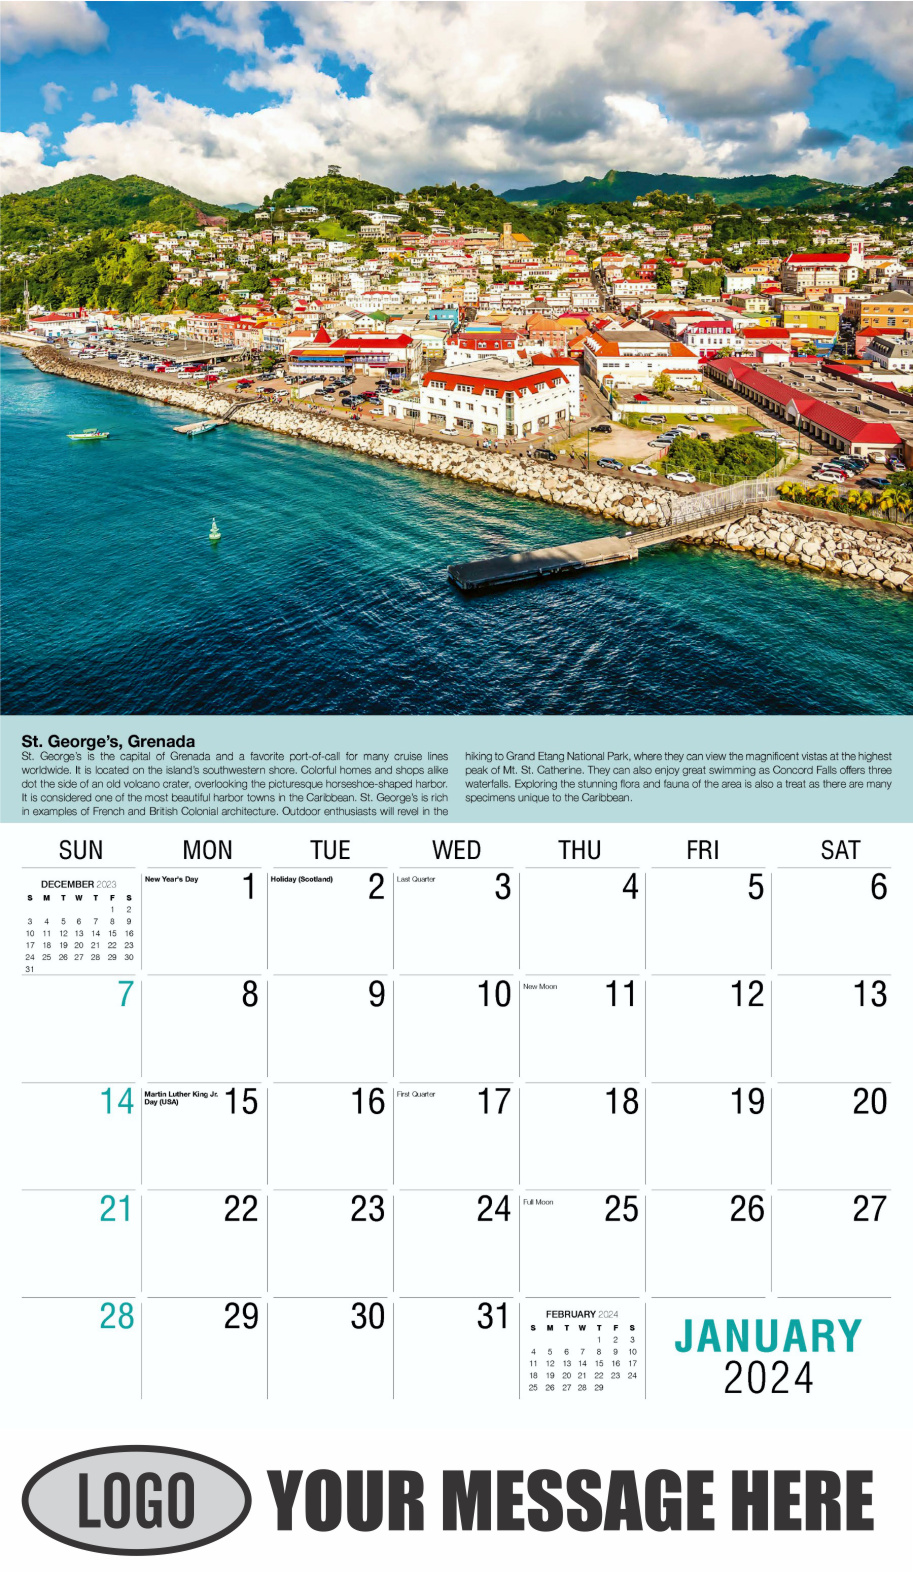 World Travel 2024 Business Advertising Wall Calendar - January